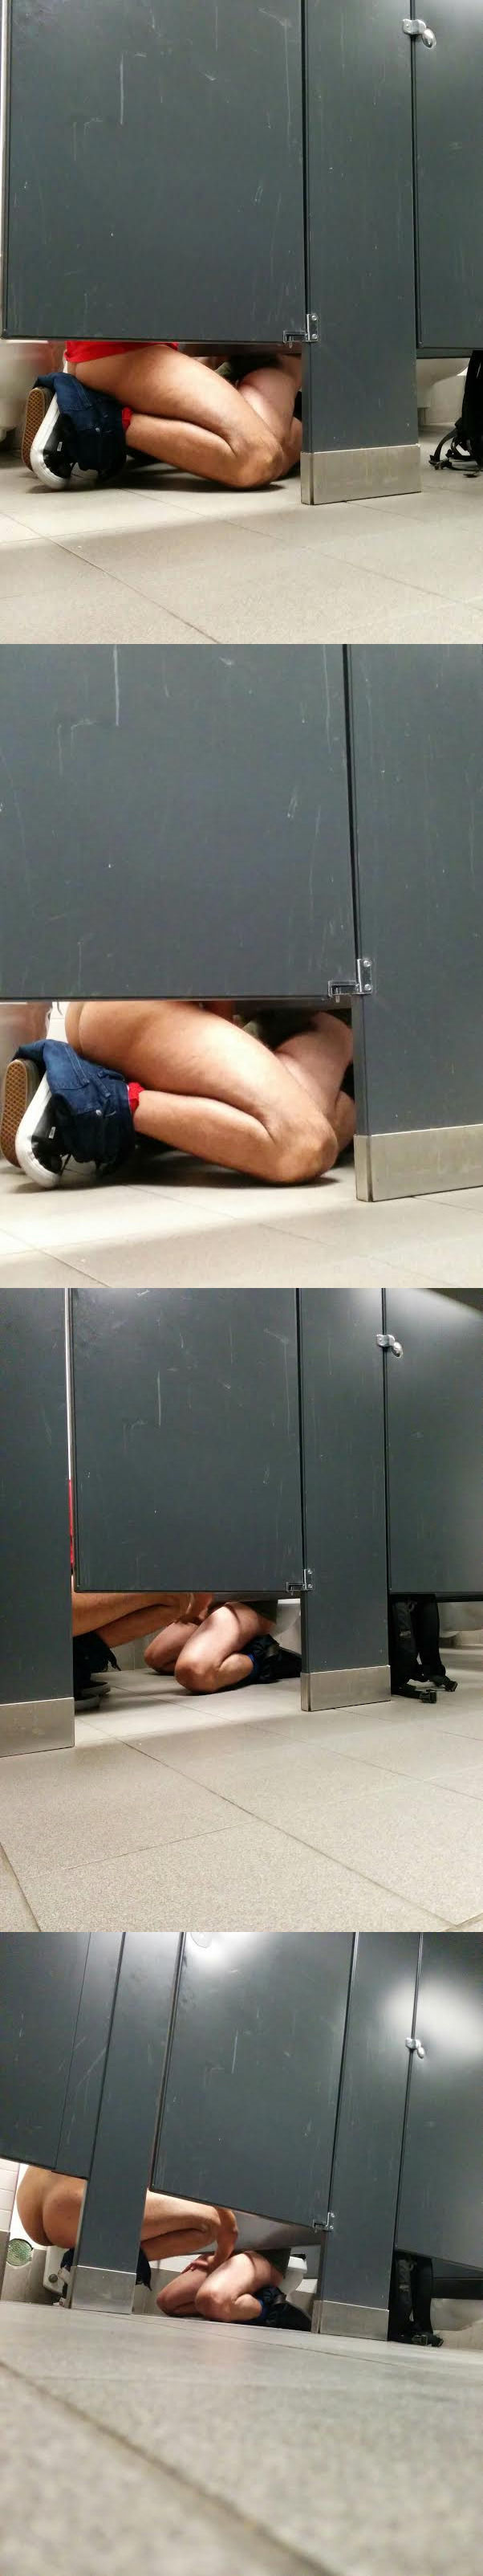 spycam guys under stall cruising toilet